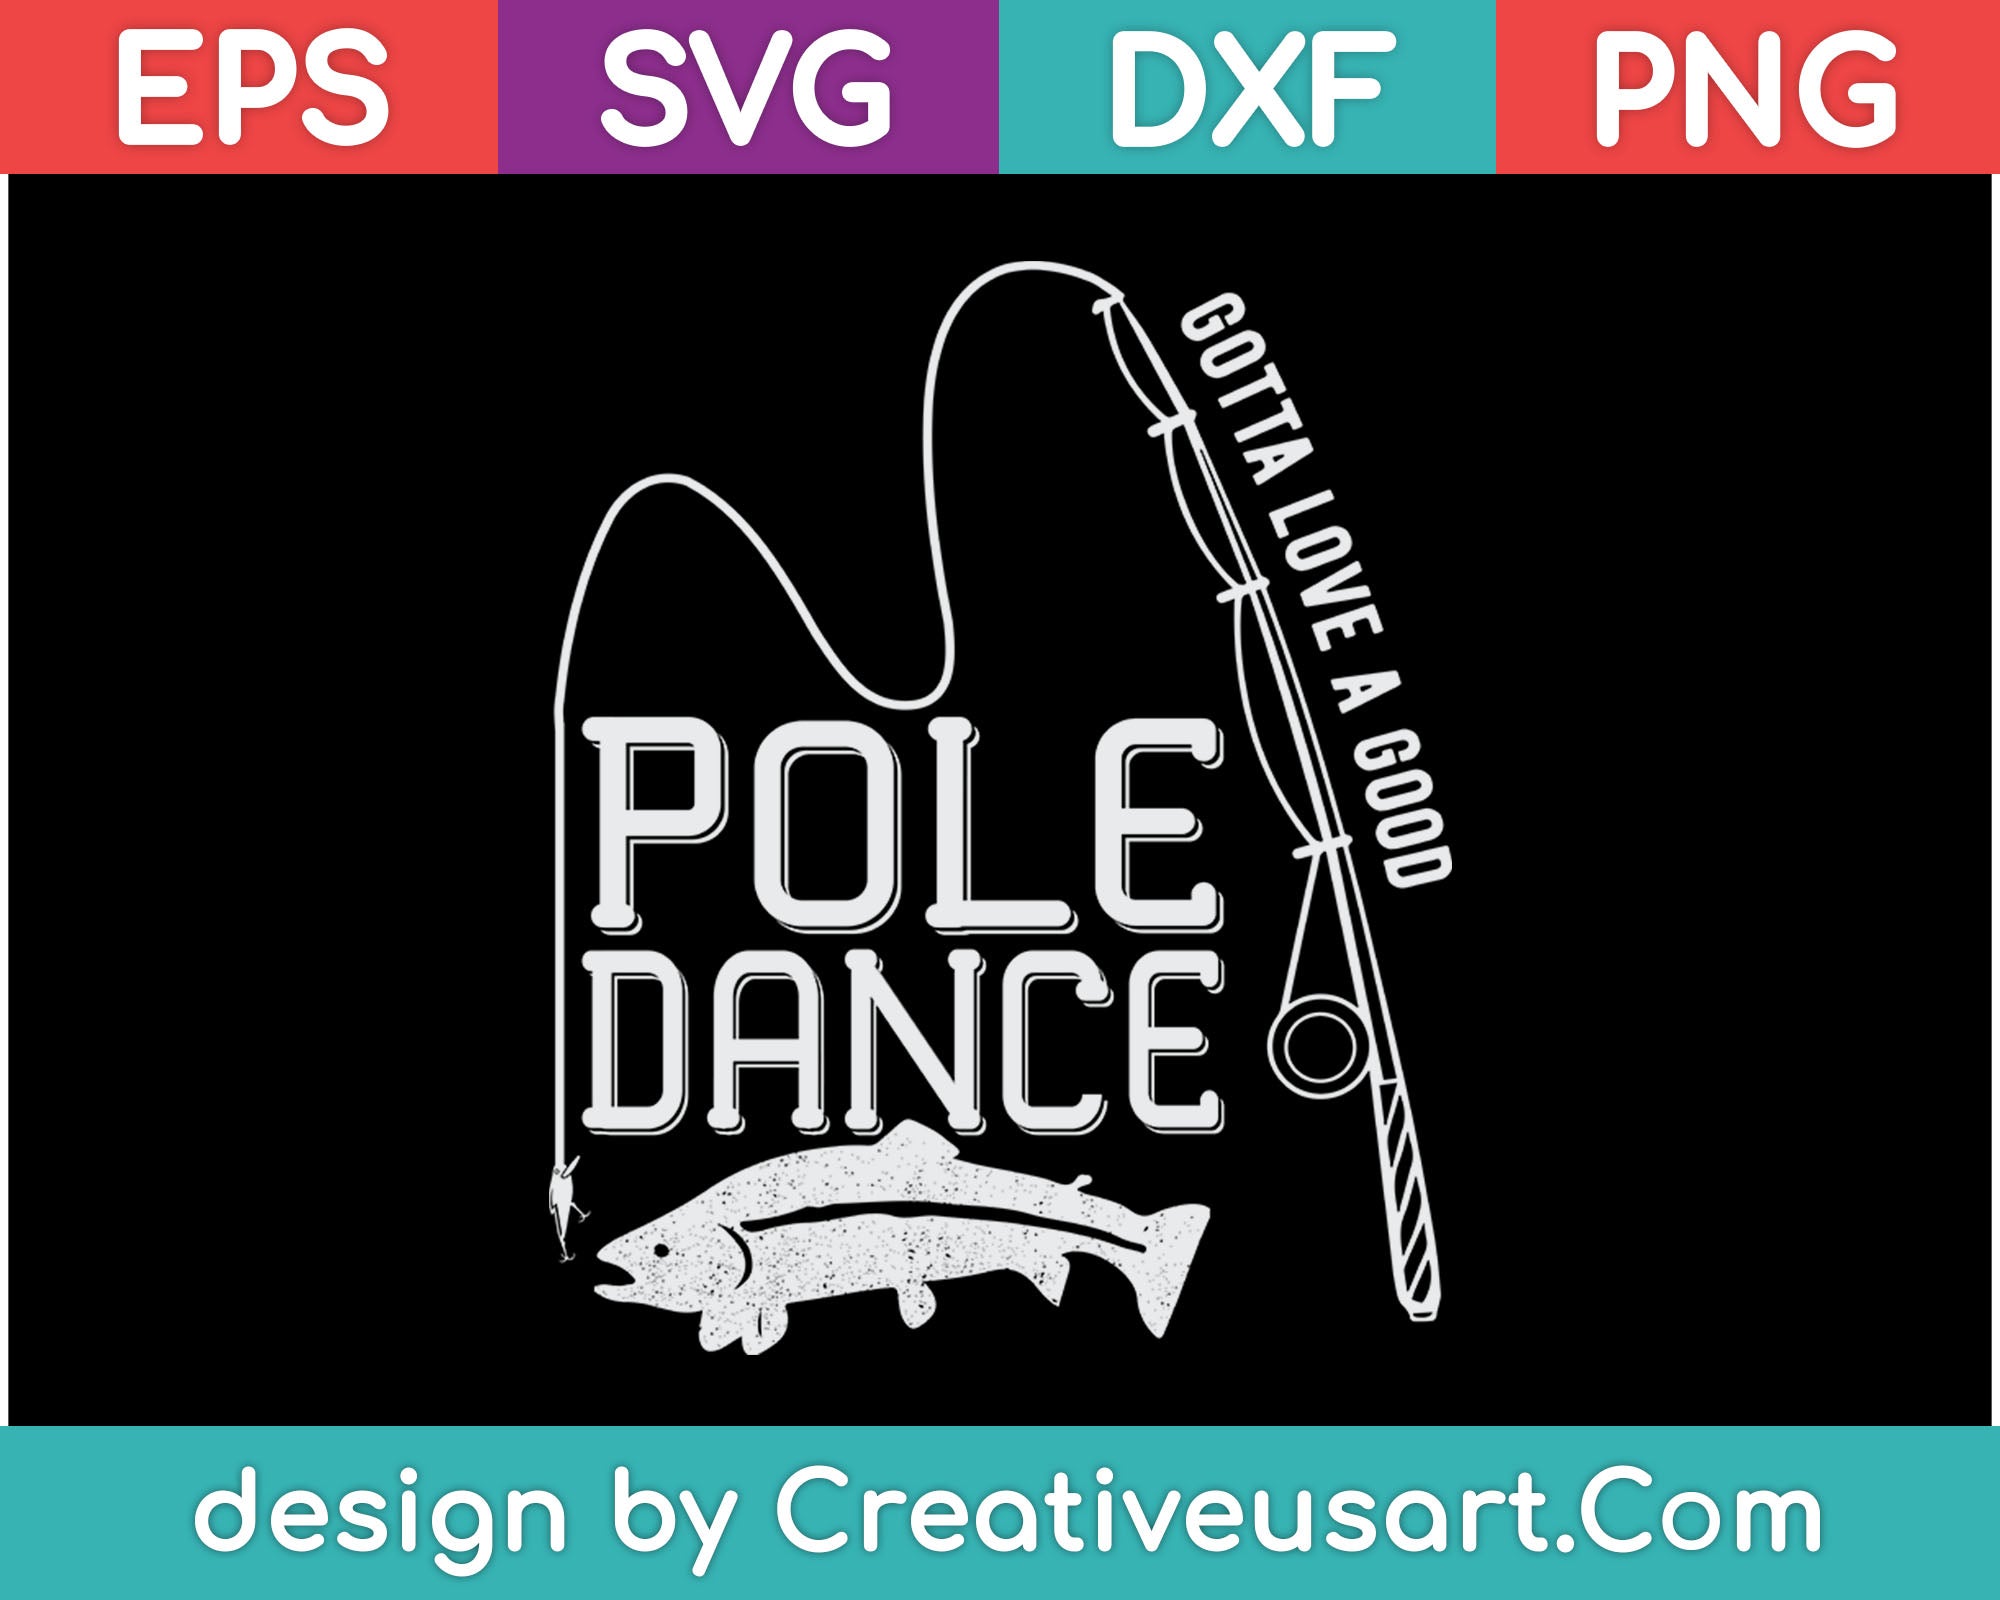 Download 39+ Gotta Love A Good Pole Dance Svg Image - All Free SVG ...